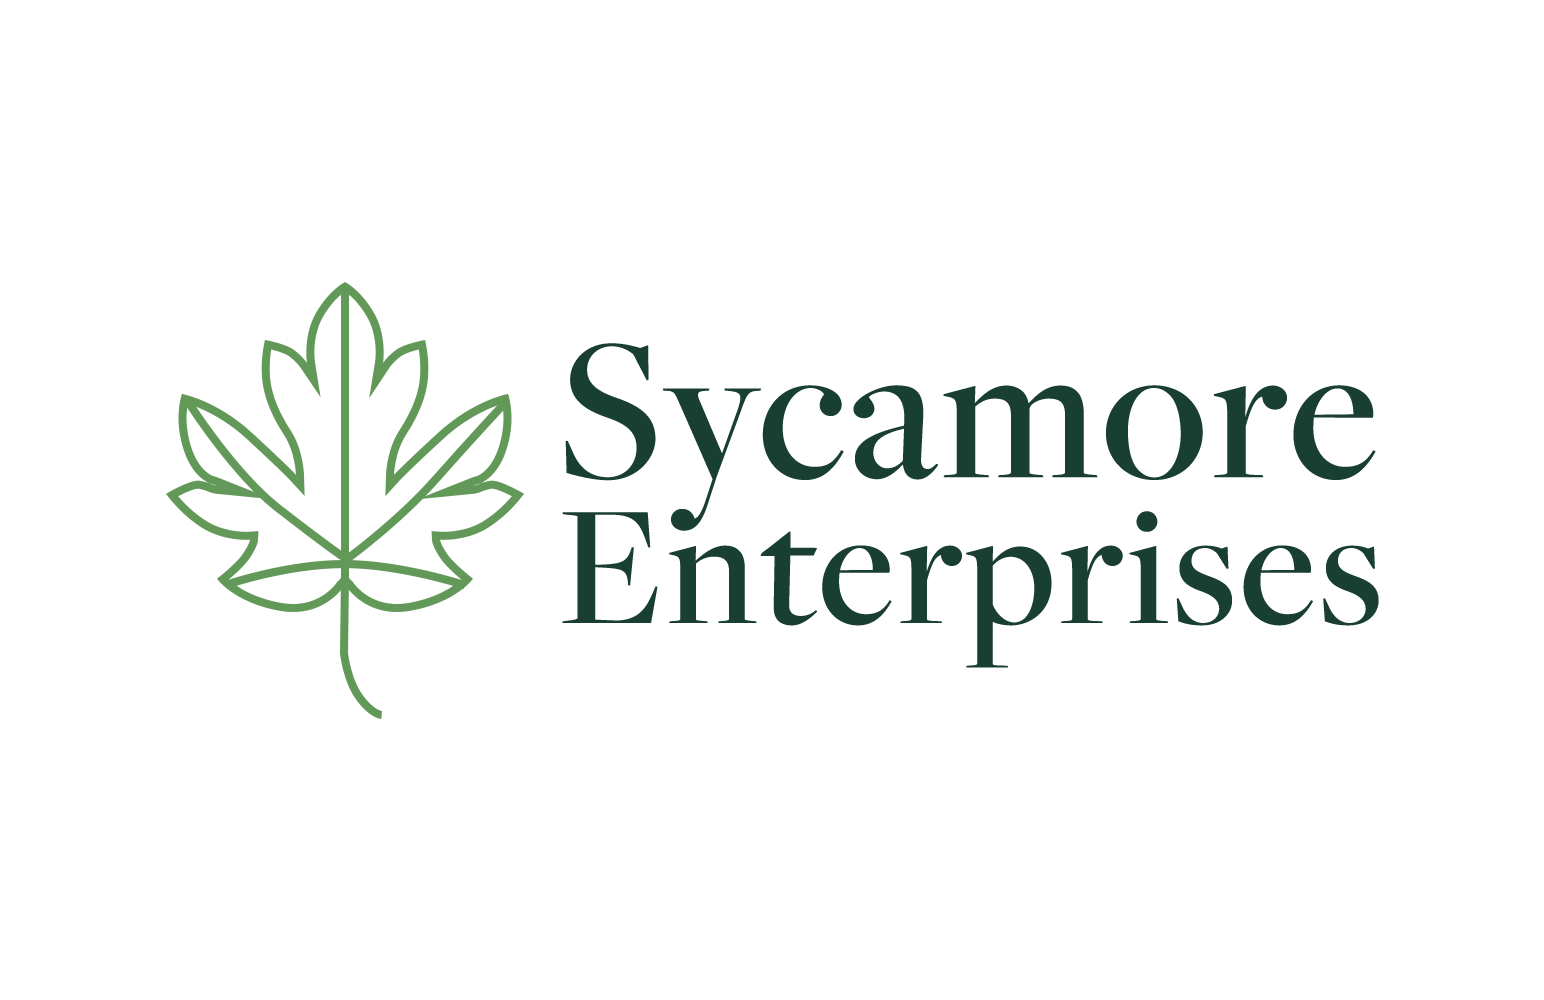 Sycamore Enterprises